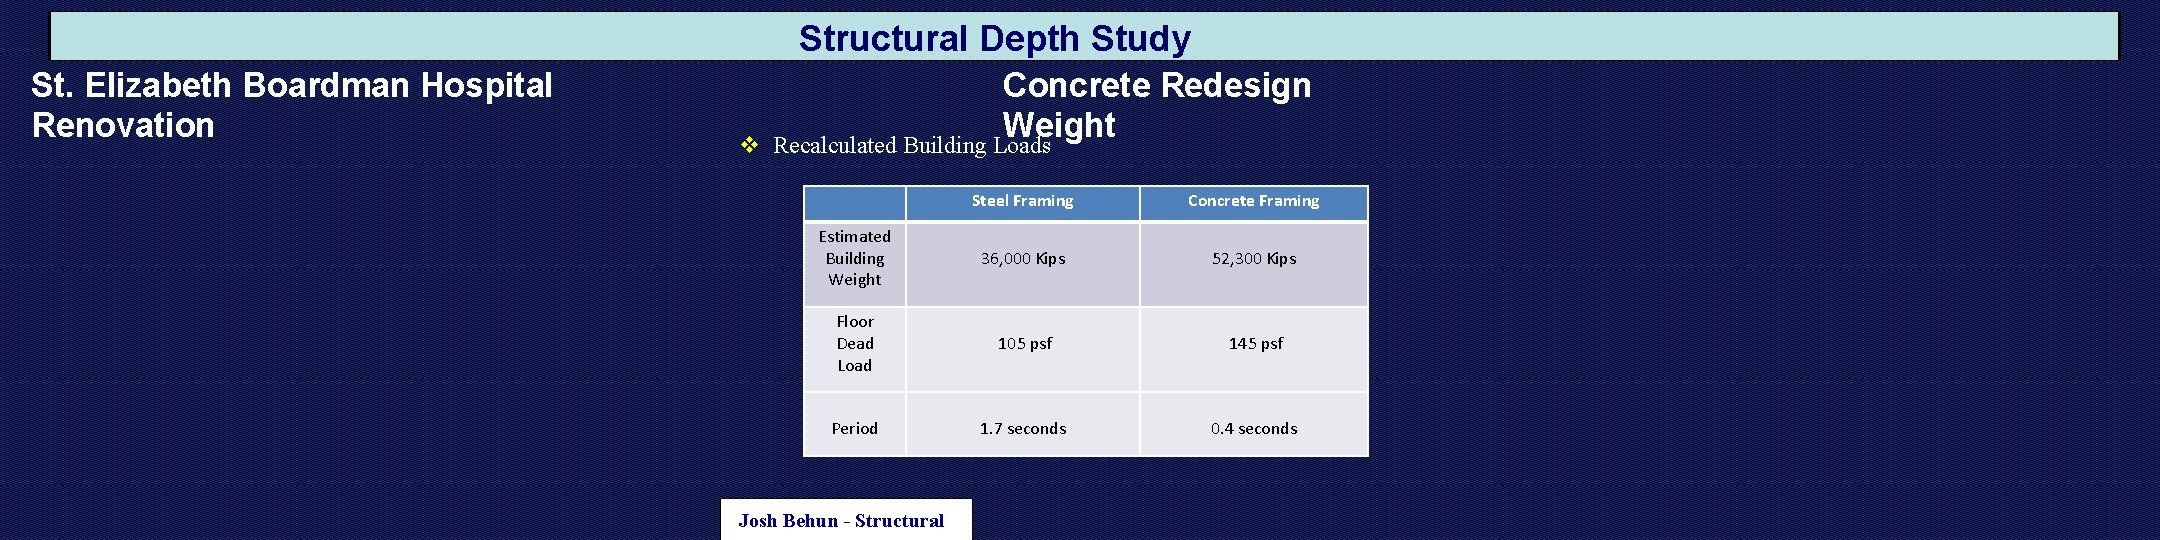 Structural Depth Study St. Elizabeth Boardman Hospital Renovation v Concrete Redesign Weight Recalculated Building